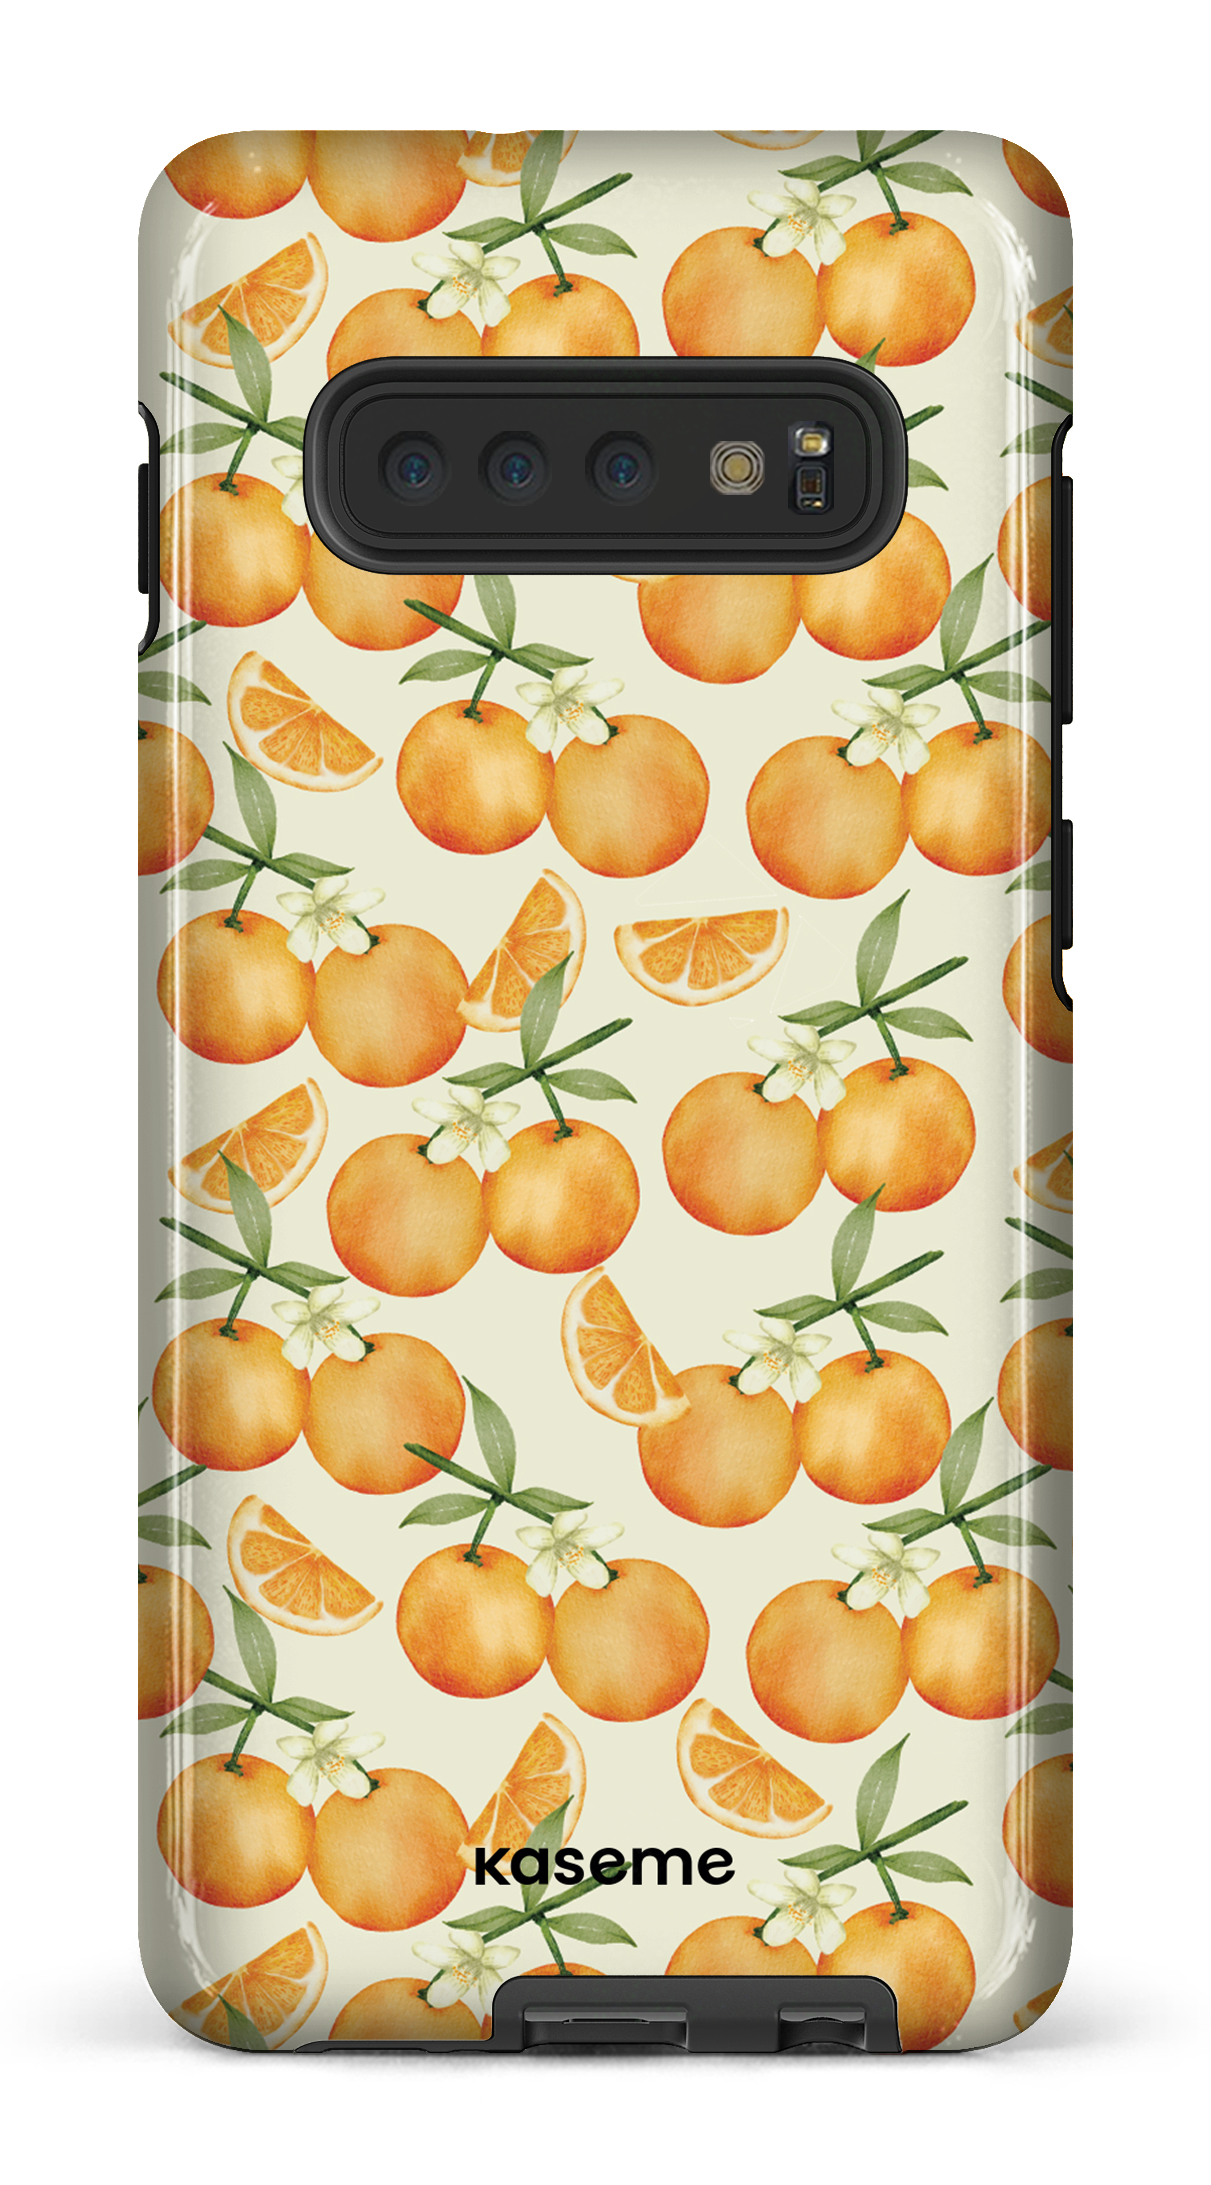 Tangerine - Galaxy S10 Plus